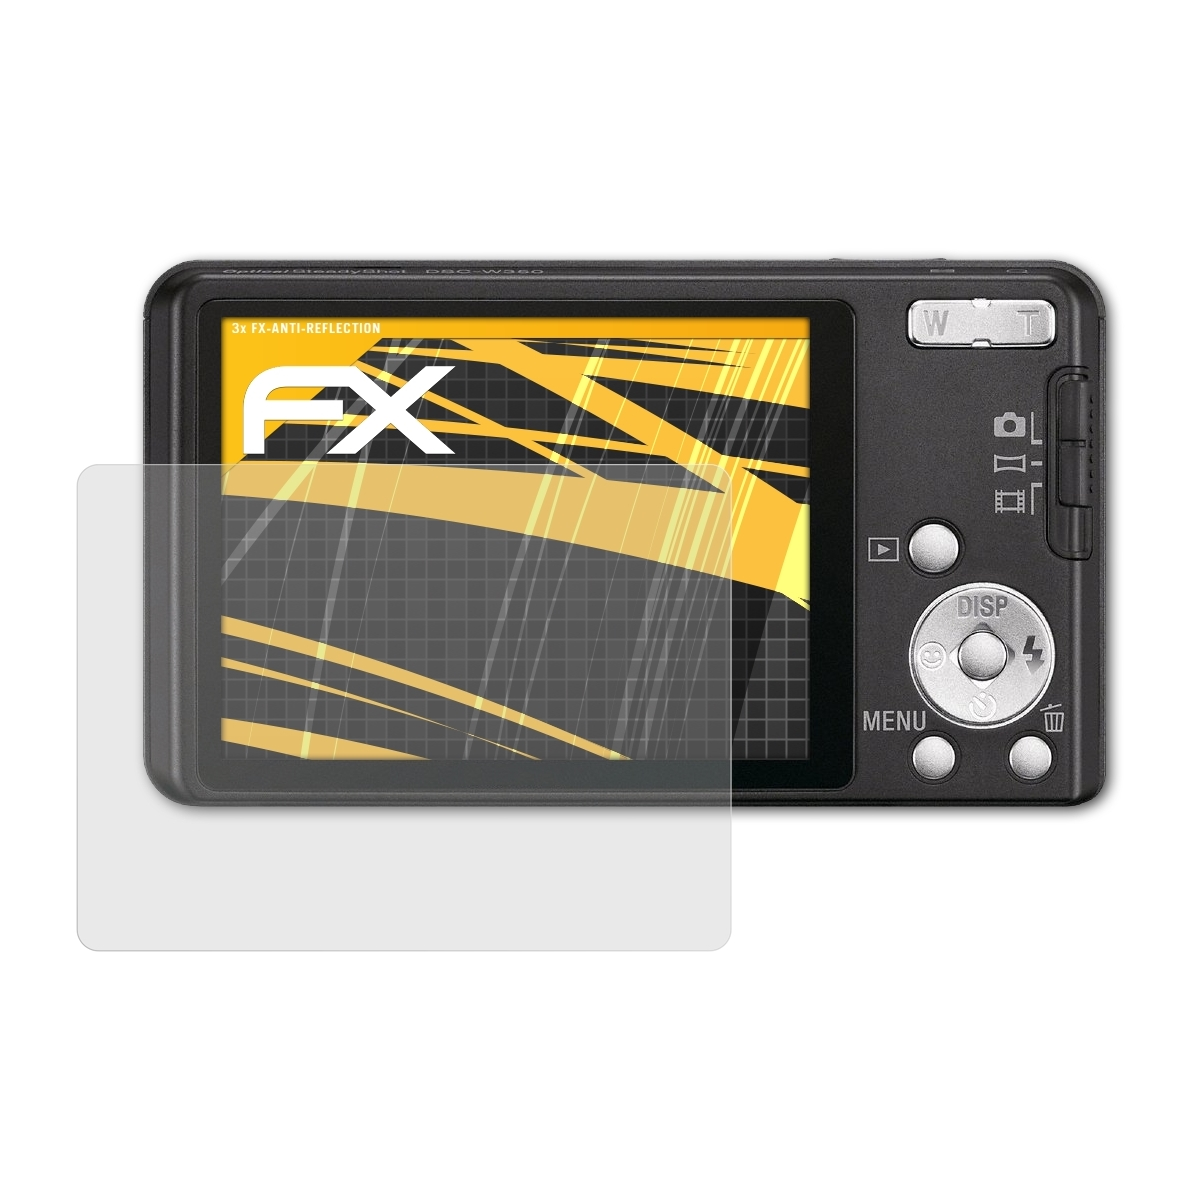 FX-Antireflex 3x DSC-W350) Sony ATFOLIX Displayschutz(für